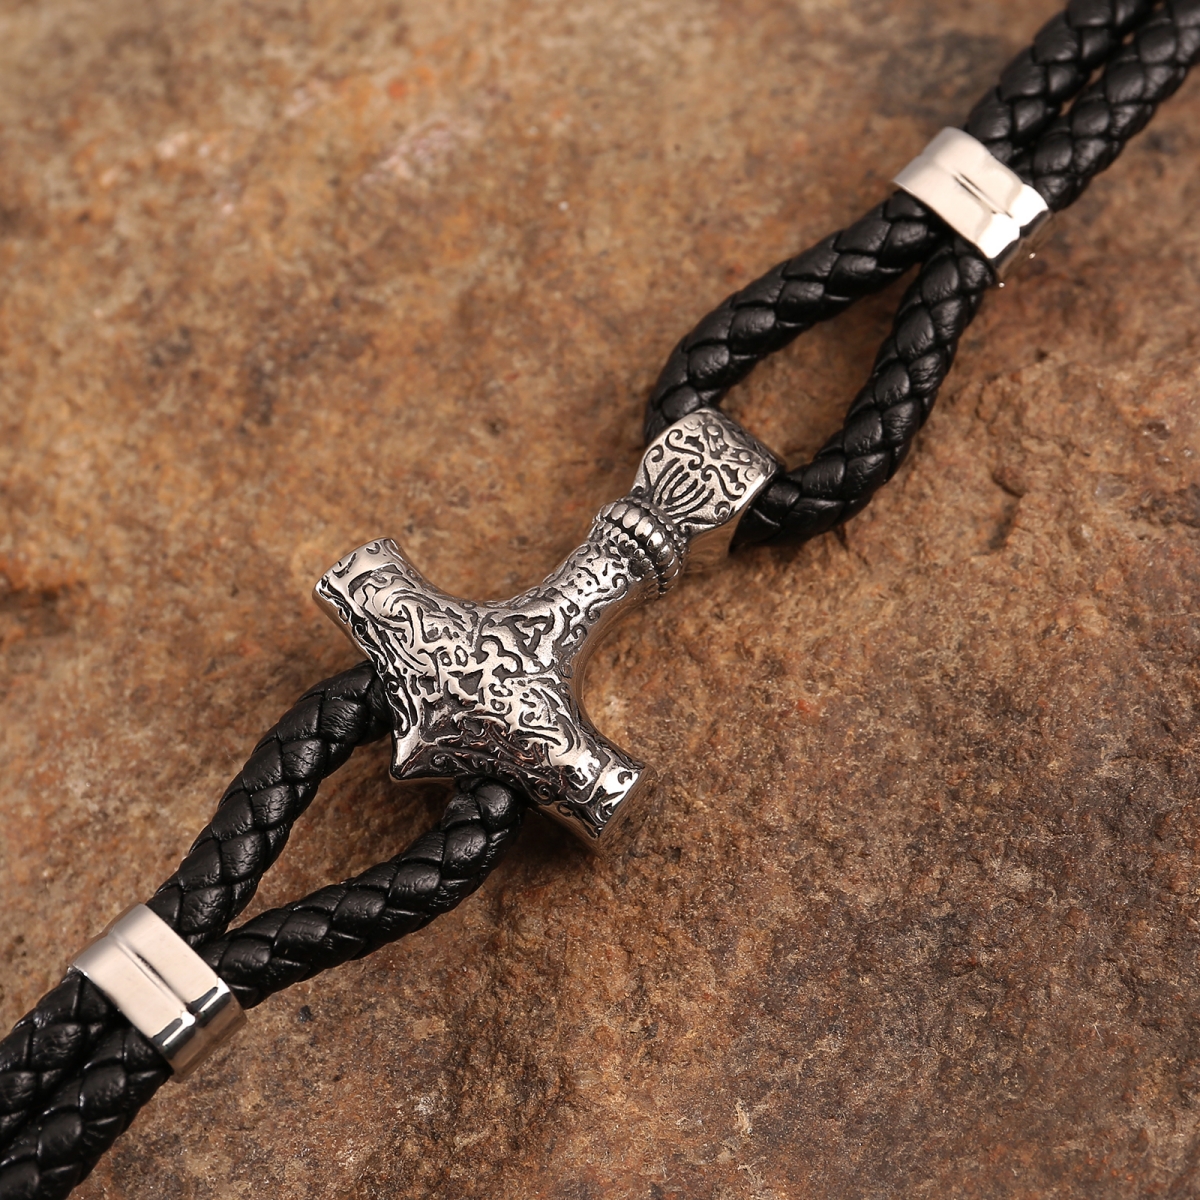 Mjolnir Bracelet US$3.9/PC-NORSECOLLECTION- Viking Jewelry,Viking Necklace,Viking Bracelet,Viking Rings,Viking Mugs,Viking Accessories,Viking Crafts